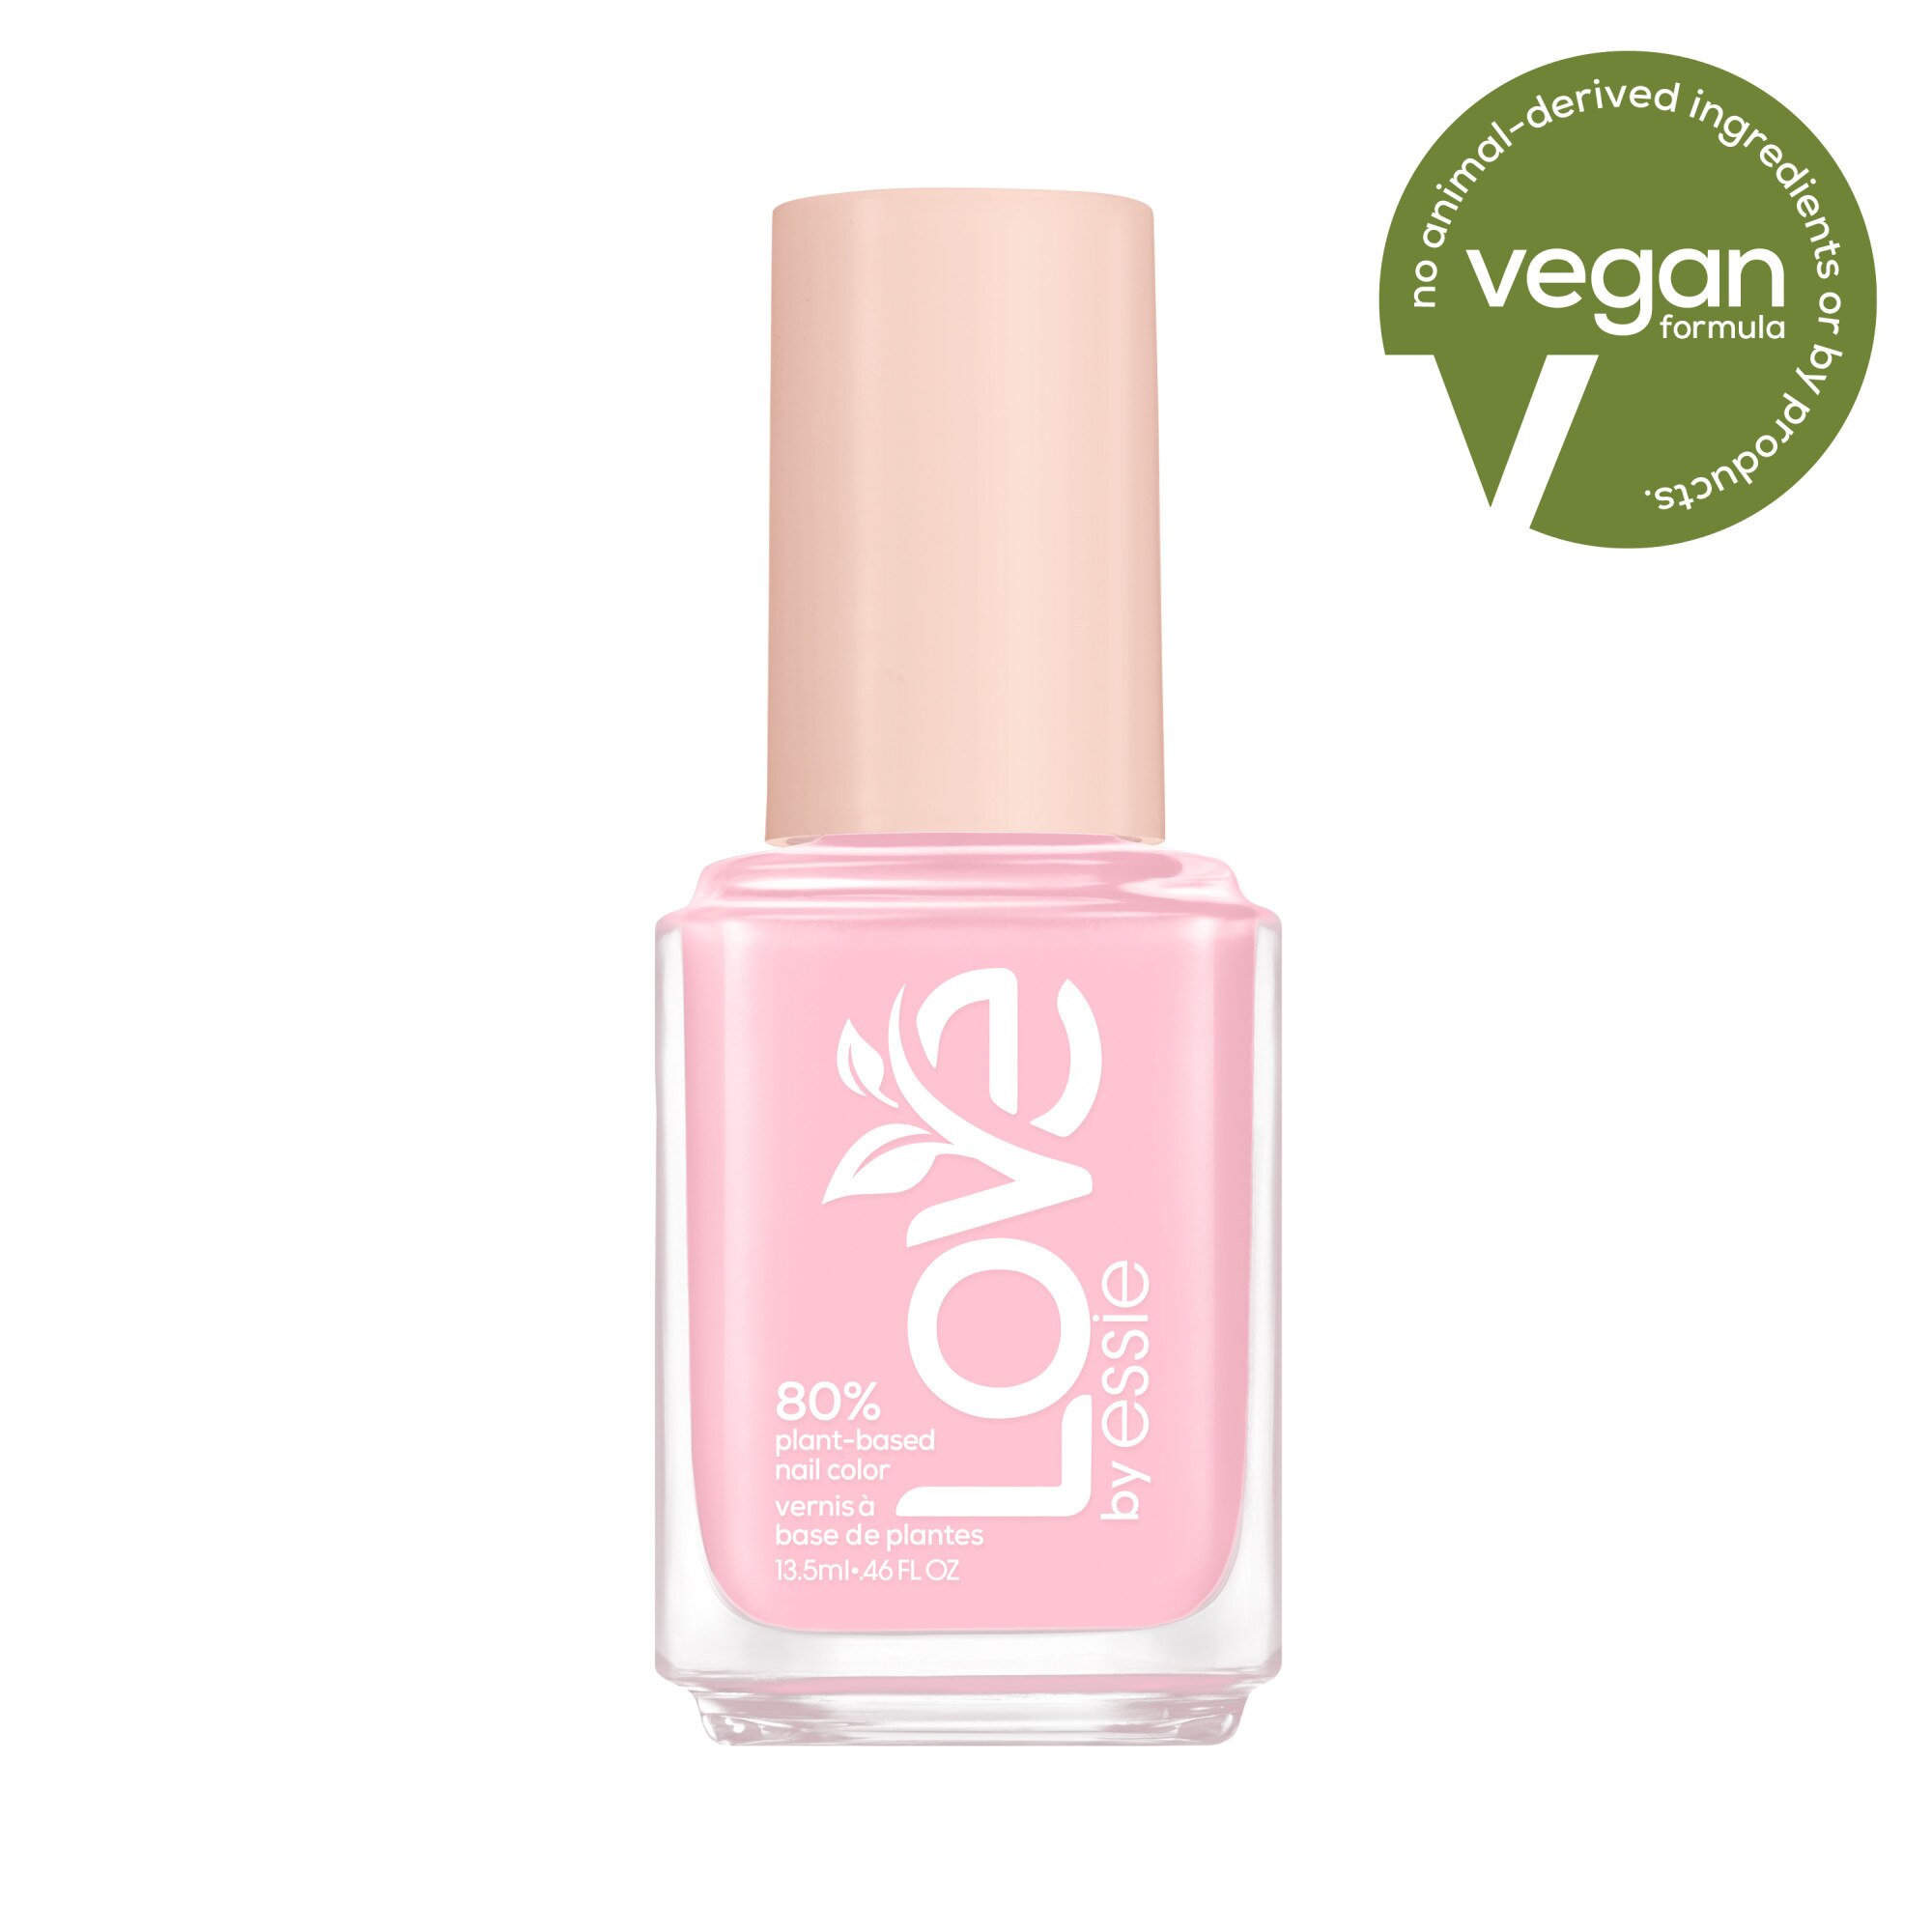 LOVE by Essie 80 percent plant-based nail polish, vegan, pink, Get It Girl,  0.46 fl oz, Free In Me - CVS Pharmacy